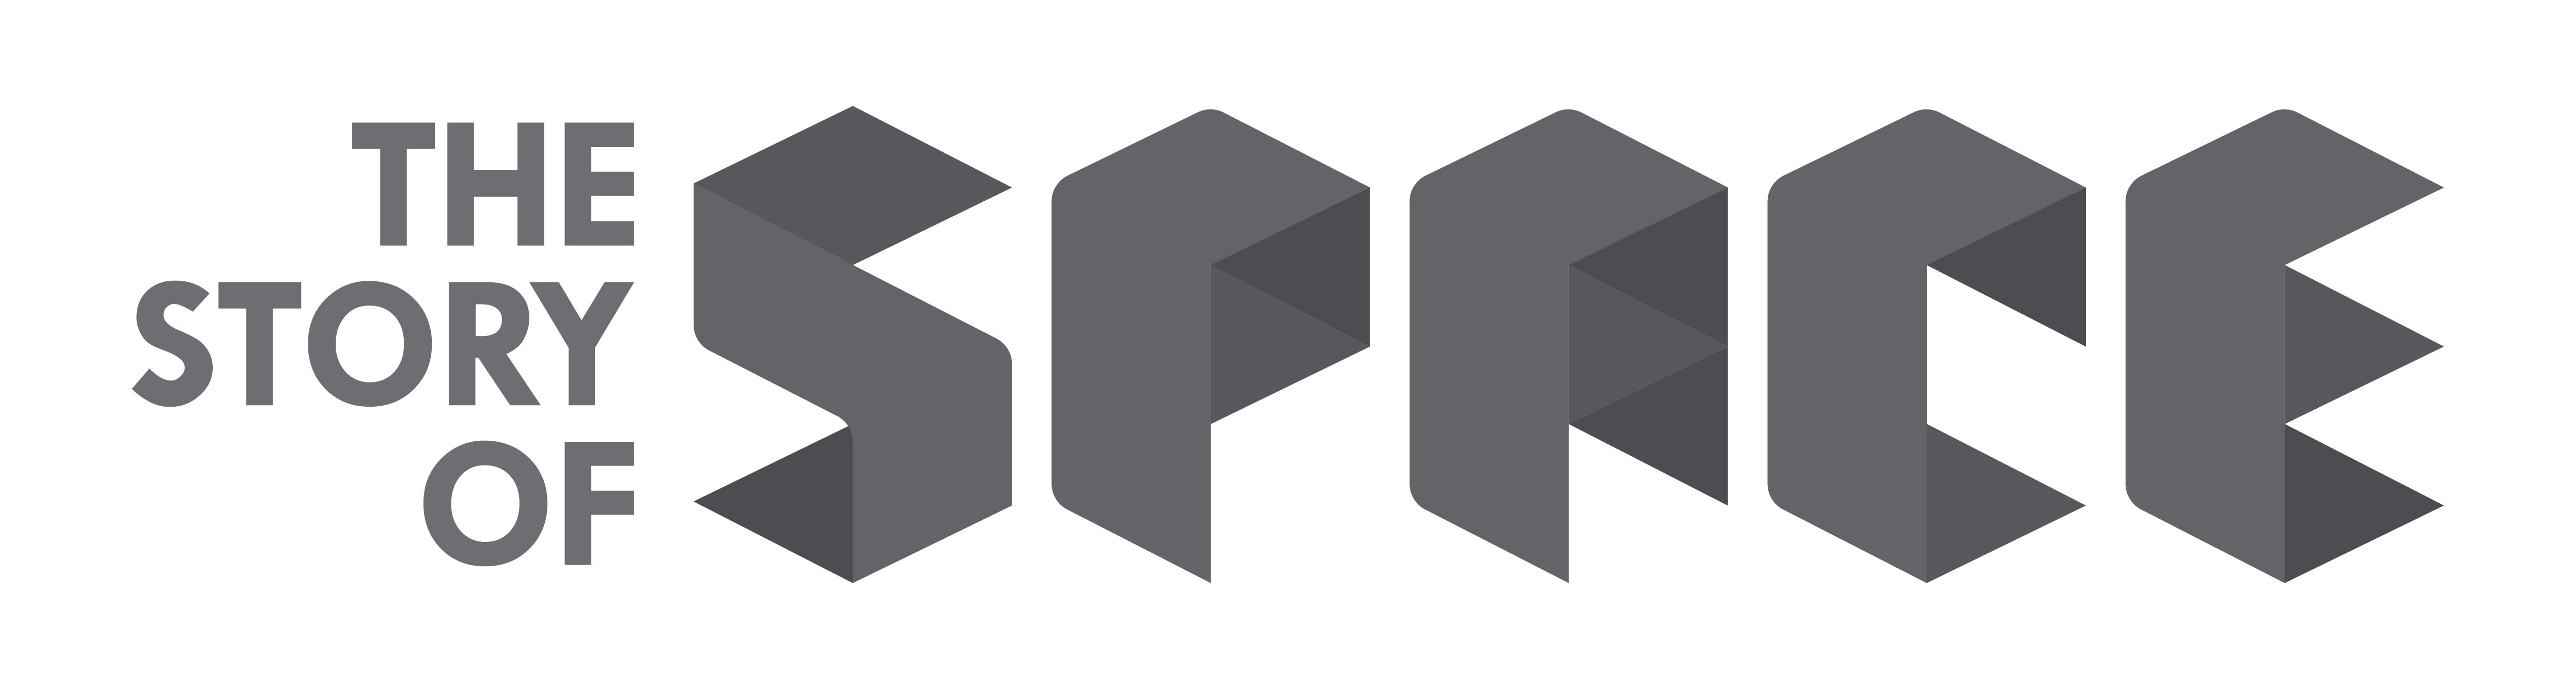 Story of space logo eps dark-01